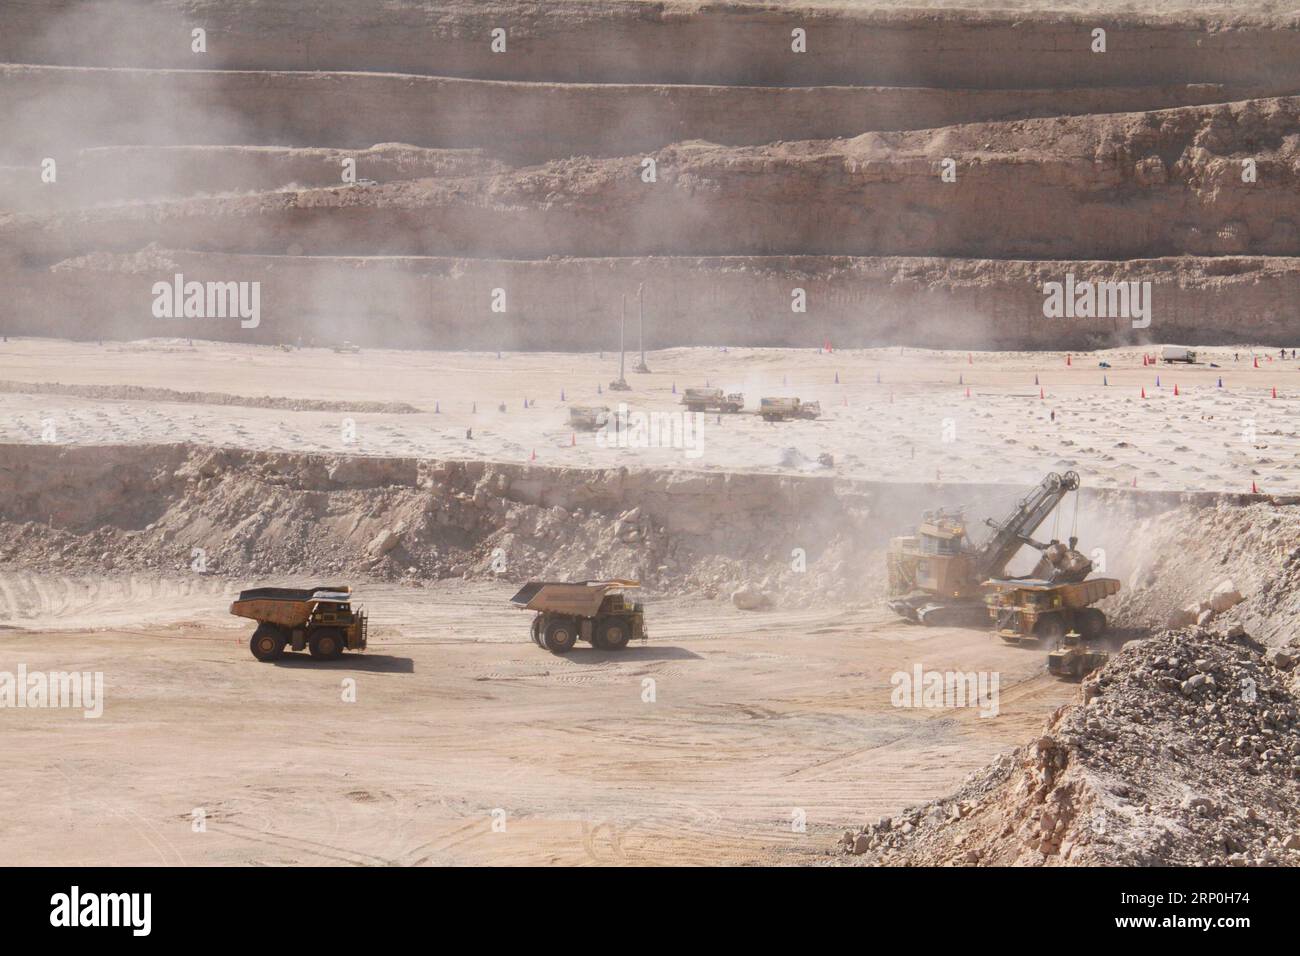 (180515) -- SWAKOPMUND, May 15, 2018 -- Photo taken on May 11, 2018 shows haul trucks working at Husab Uranium Mine in western Namibia. The Husab mine is one of the biggest uranium mines in the world. ) (yy) NAMIBIA-SWAKOPMUND-HUSAB URANIUM MINE WUxCHANGWEI PUBLICATIONxNOTxINxCHN Stock Photo